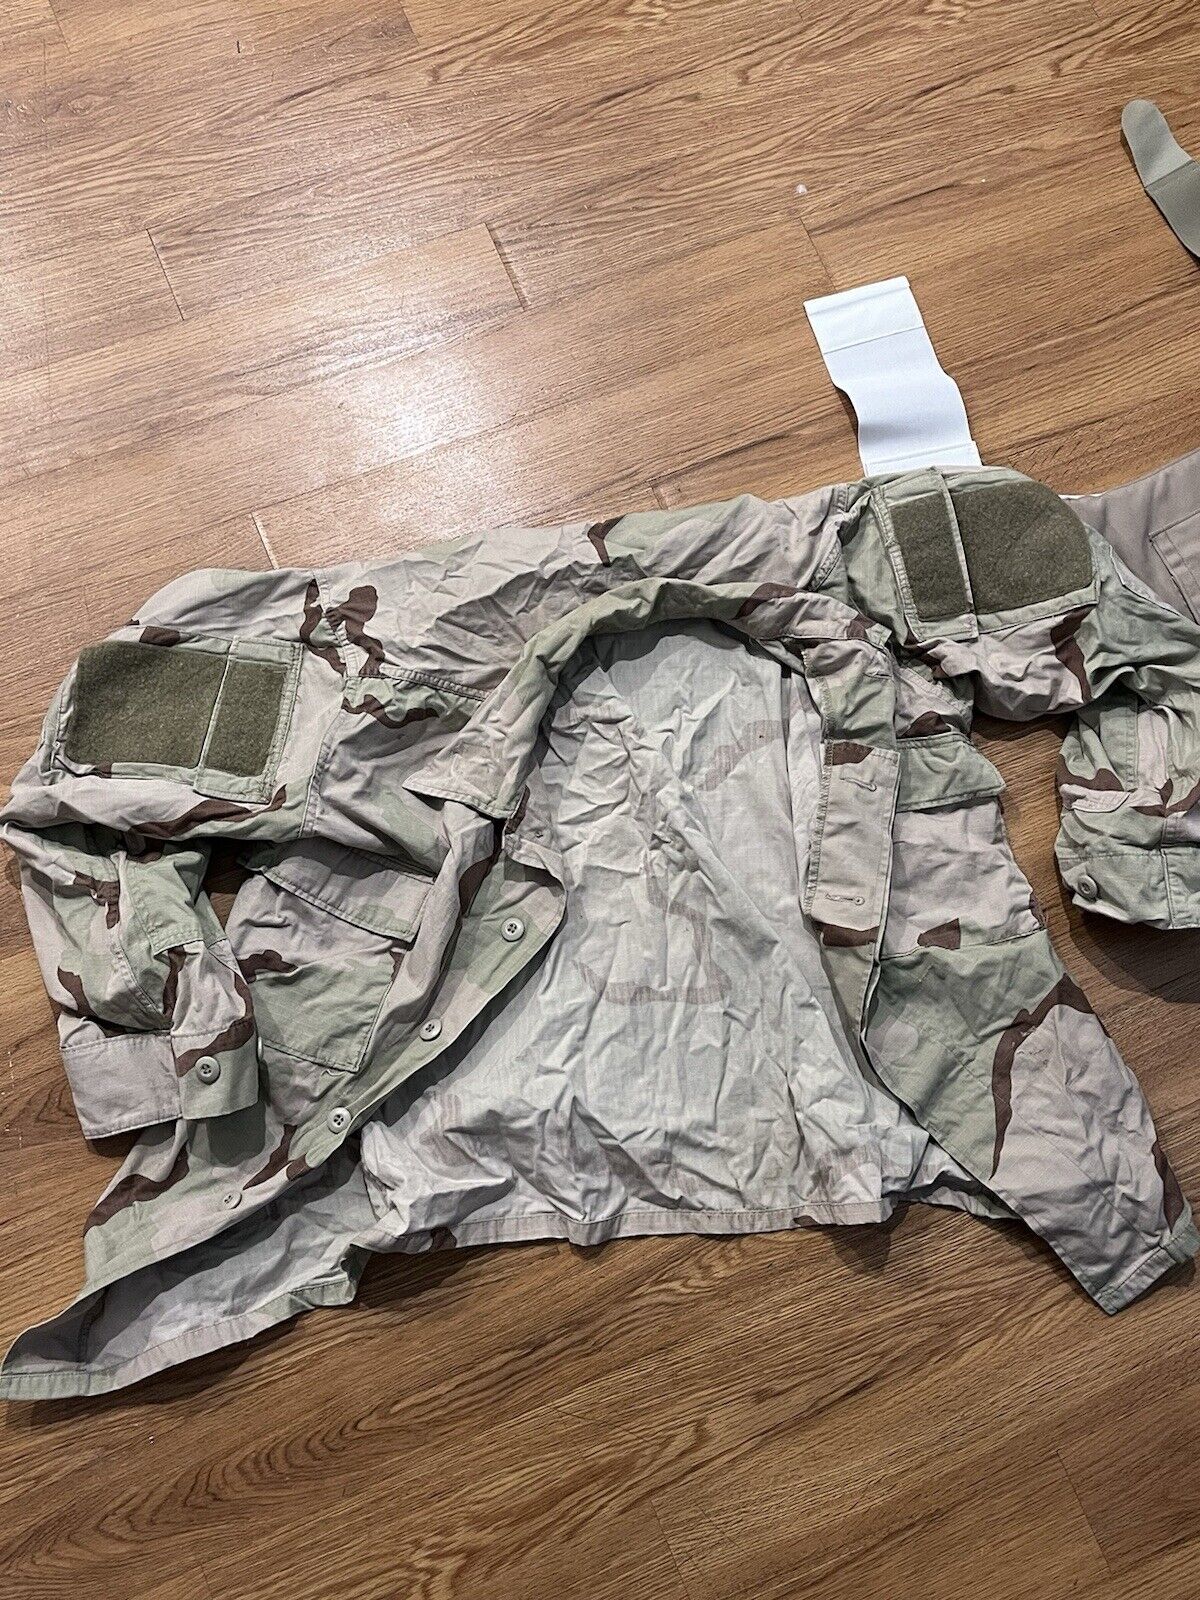 DCU Desert Camo Uniform (Raid Modded) Med Short